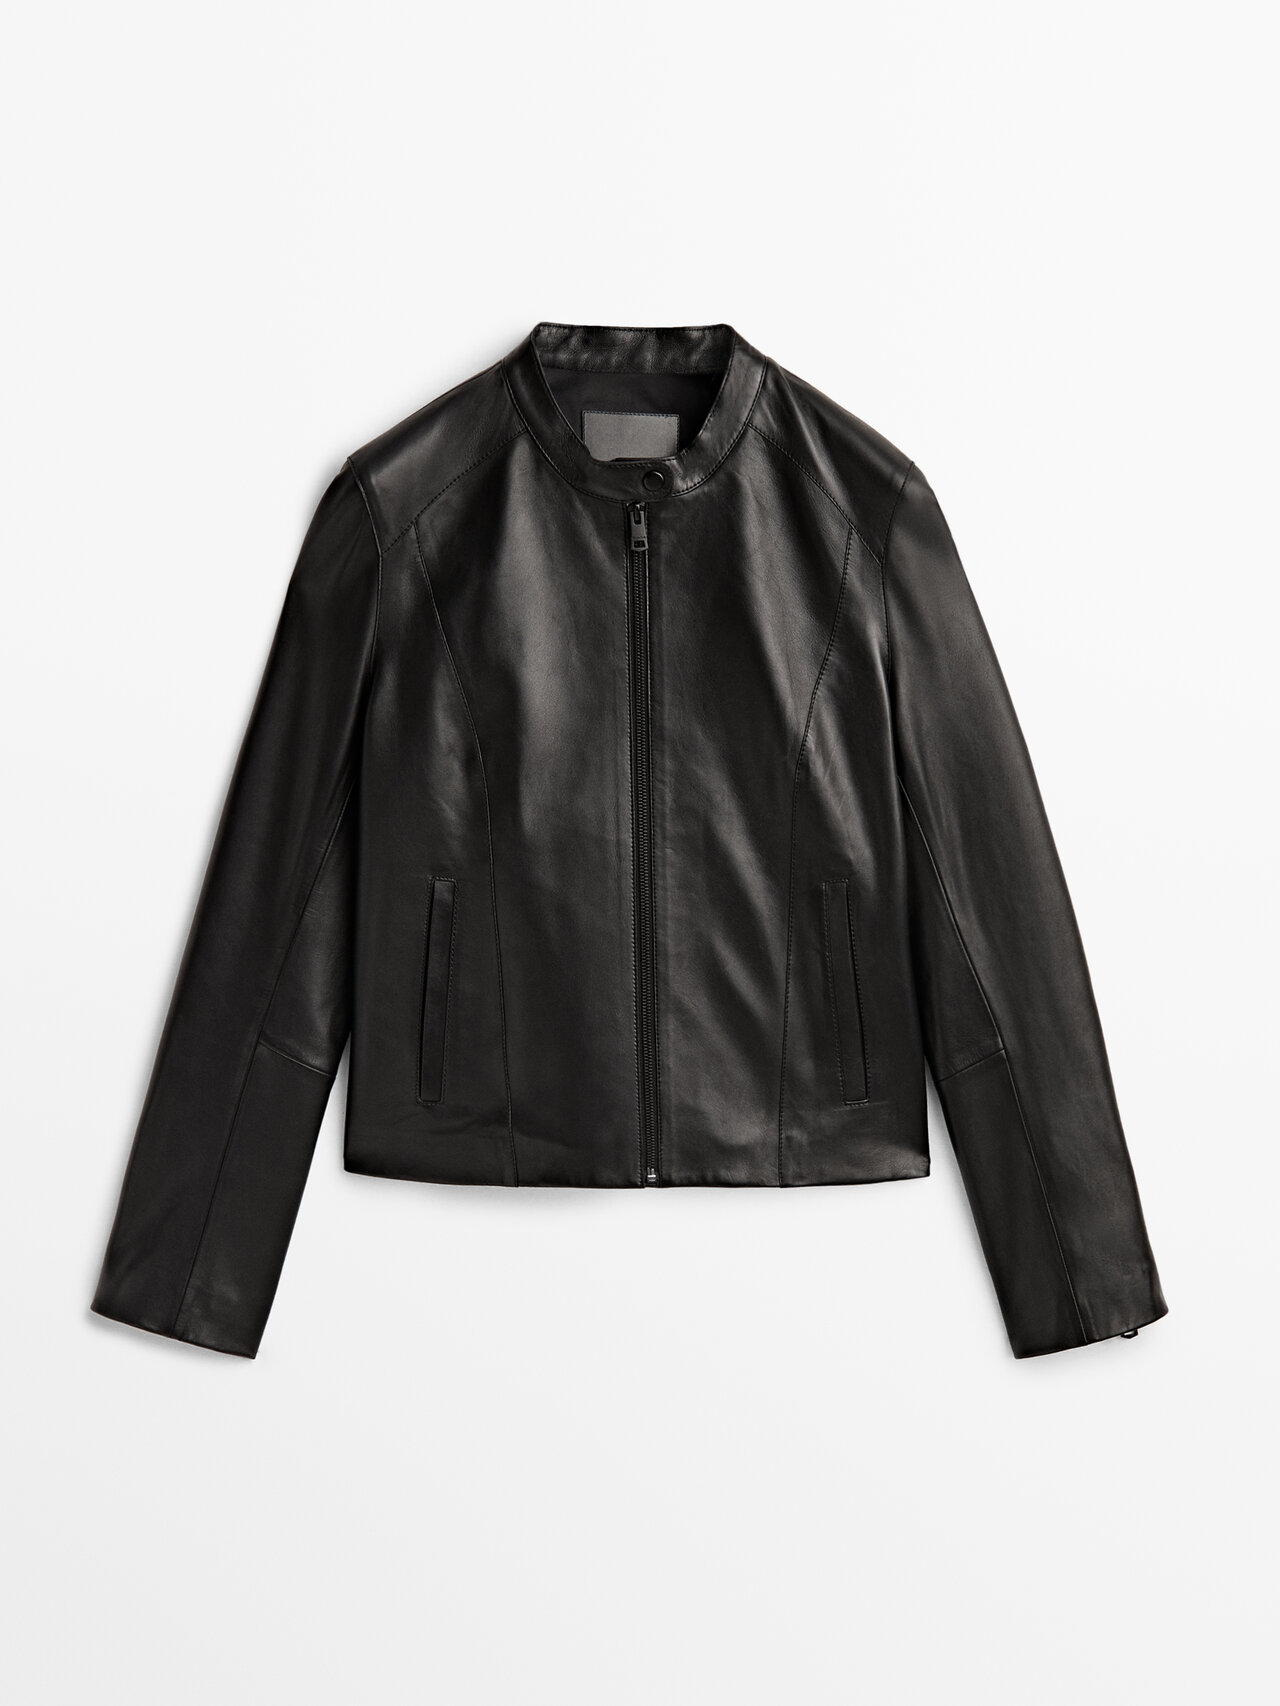 Massimo Dutti Black Nappa Leather Jacket